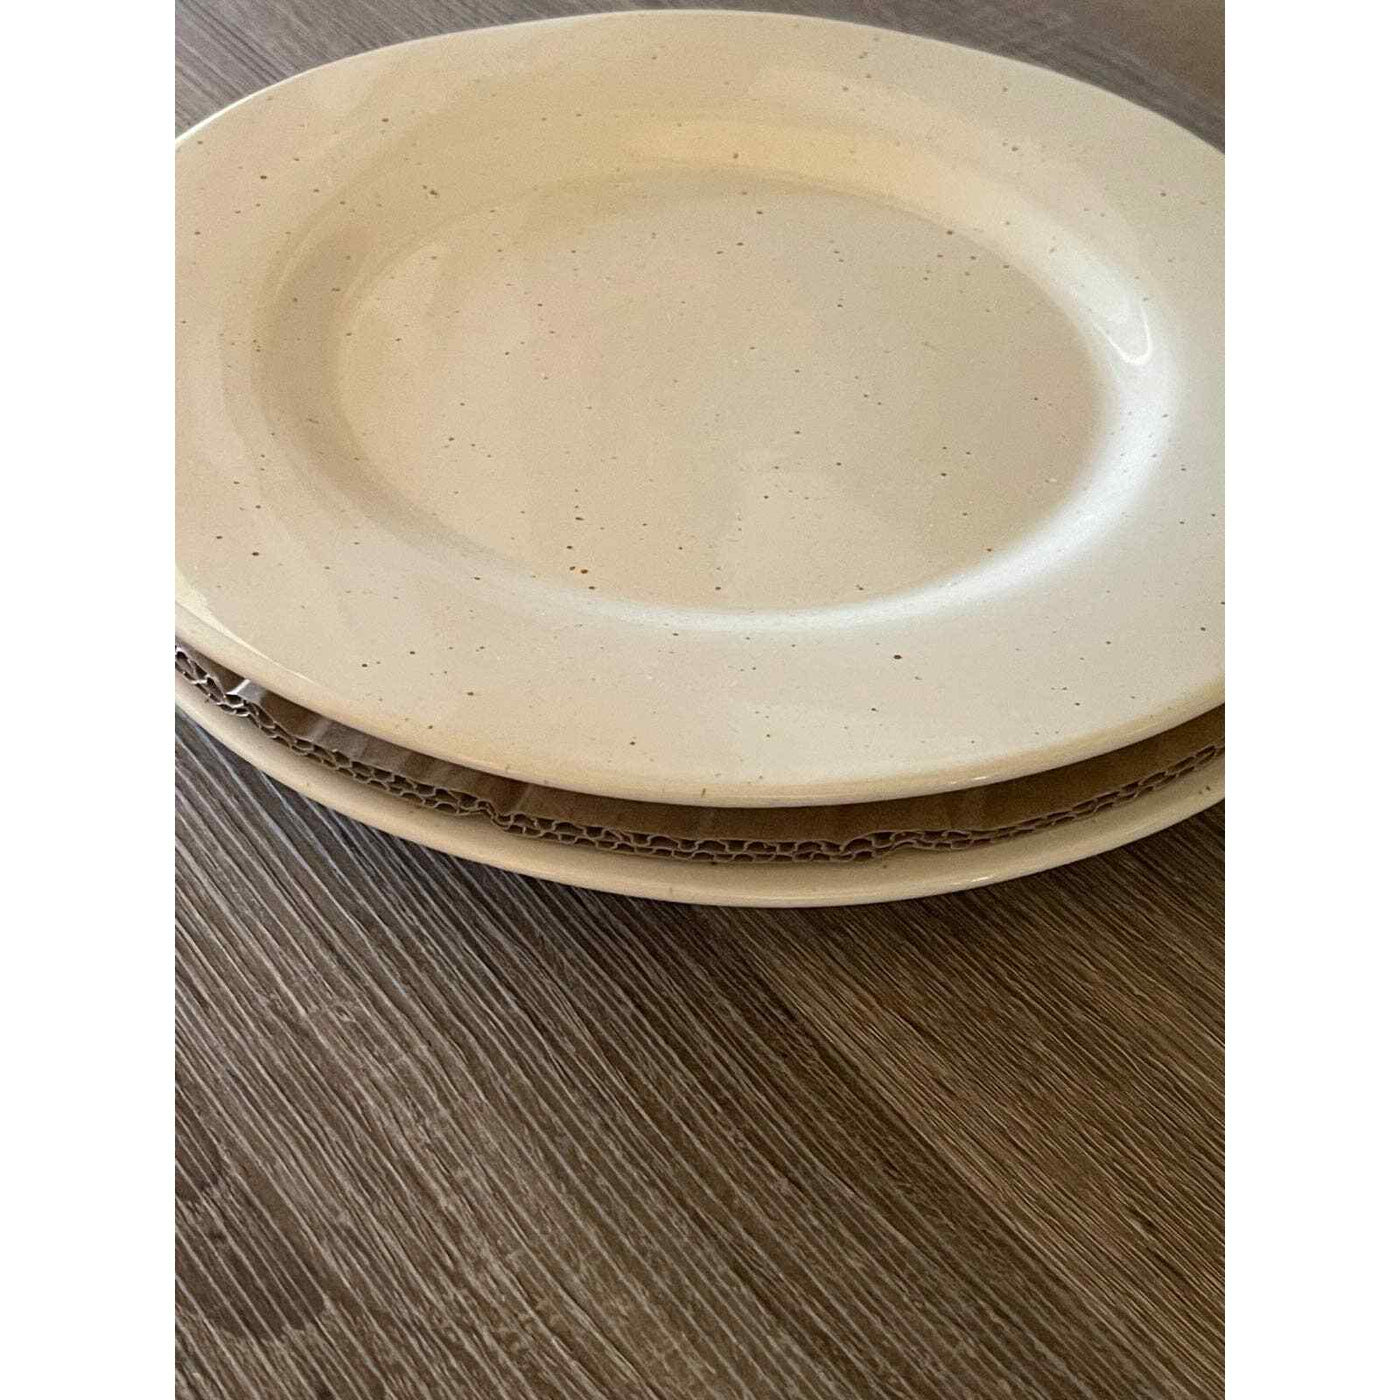 4PK Stoneware Rockwood Dinner Plates - Threshold